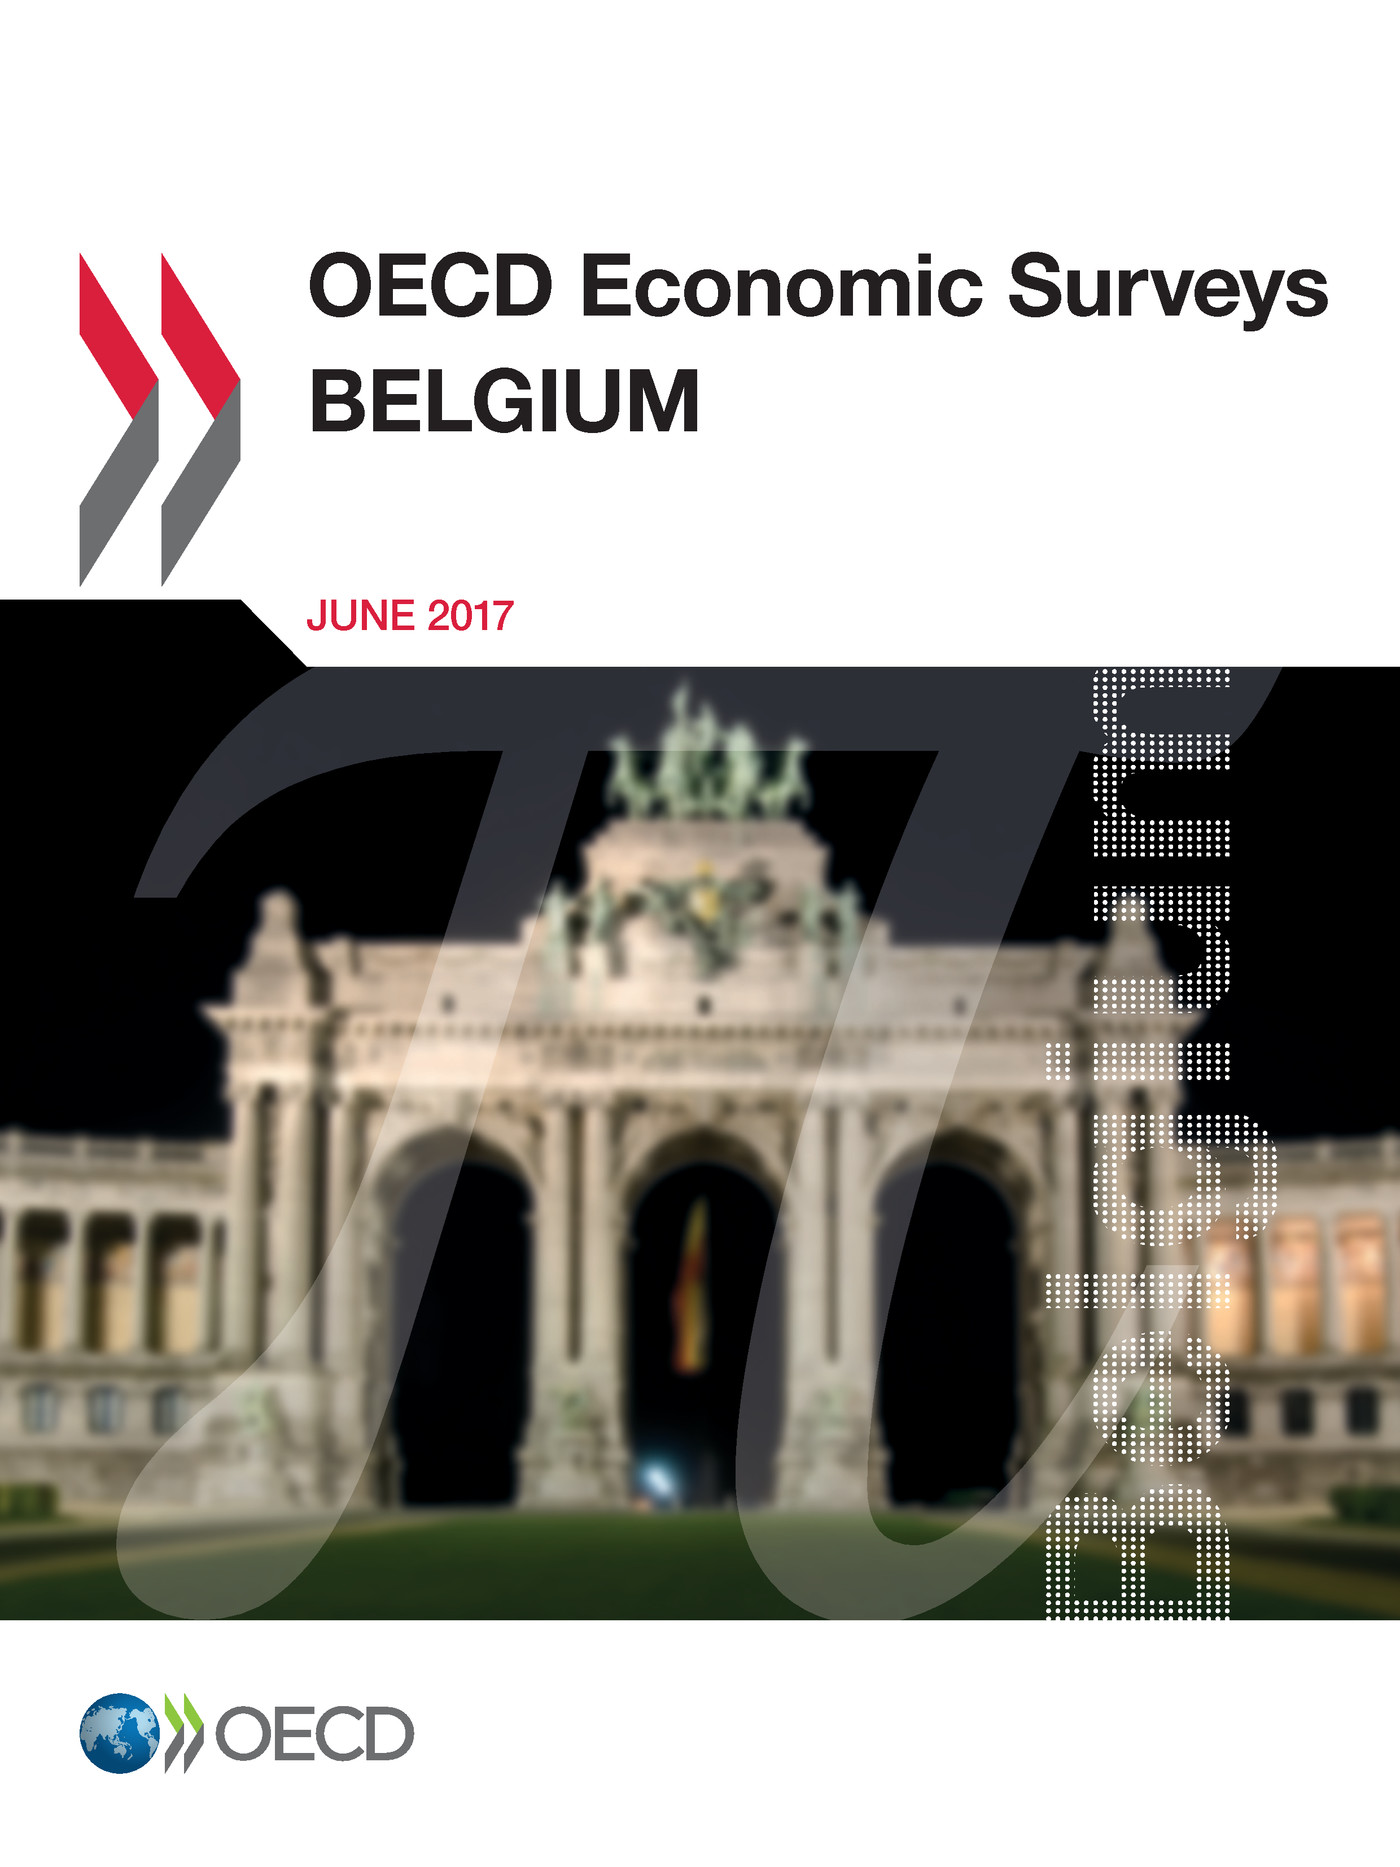 OECD Economic Surveys: Belgium 2017 -  Collectif - OCDE / OECD